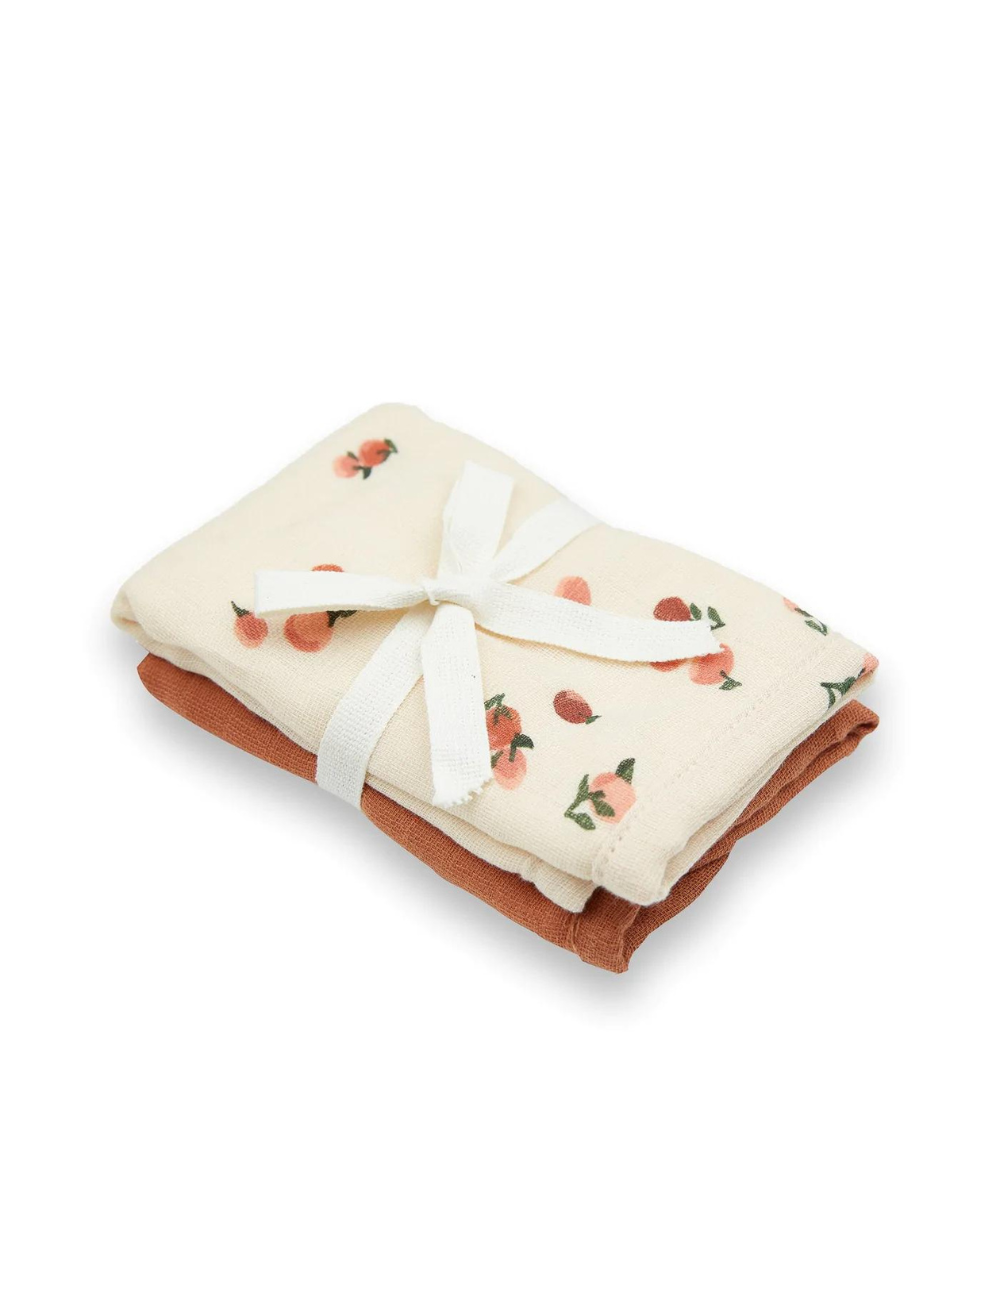 Set of Two Washcloths - Peaches